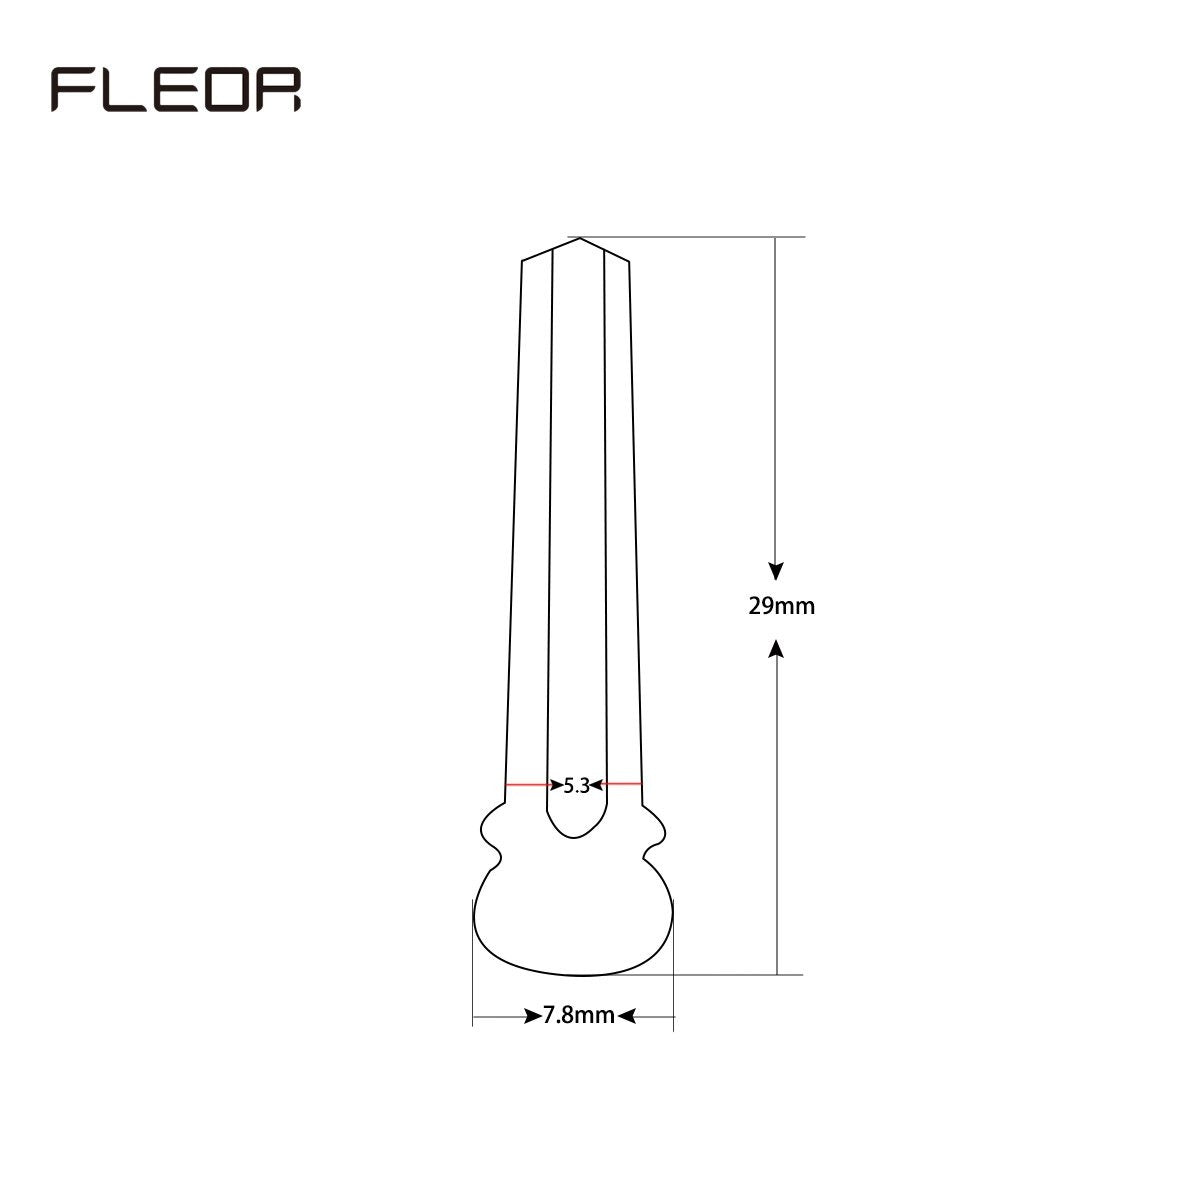 FLEOR 6PCS Rosewood Bridge Pins for Acoustic Guitar Accessories